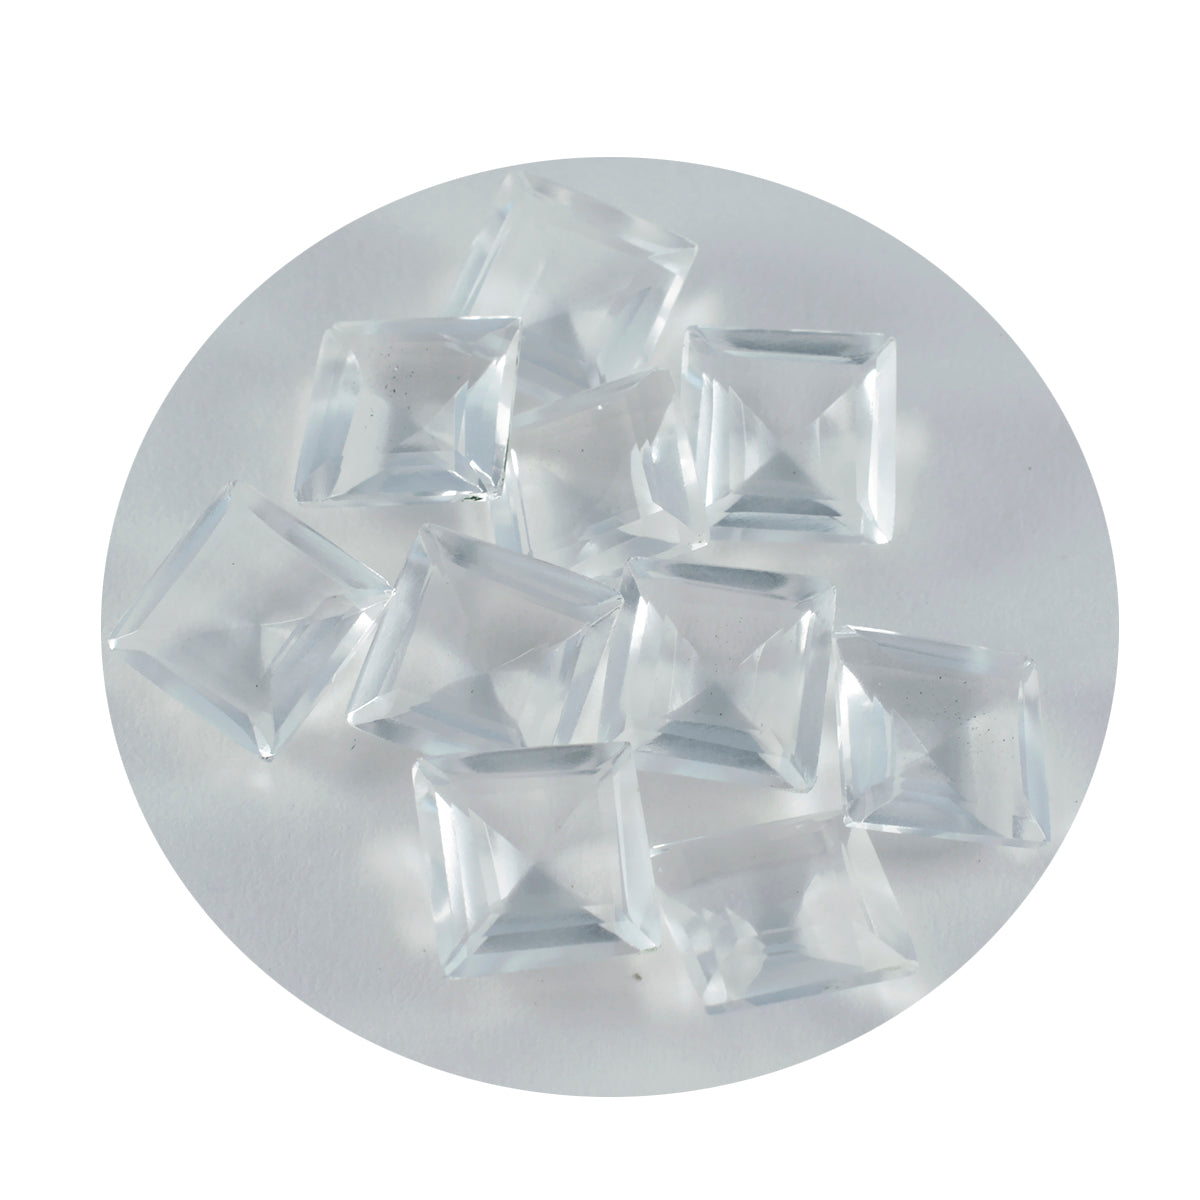 Riyogems 1PC White Crystal Quartz Faceted 12x12 mm Square Shape lovely Quality Loose Gem